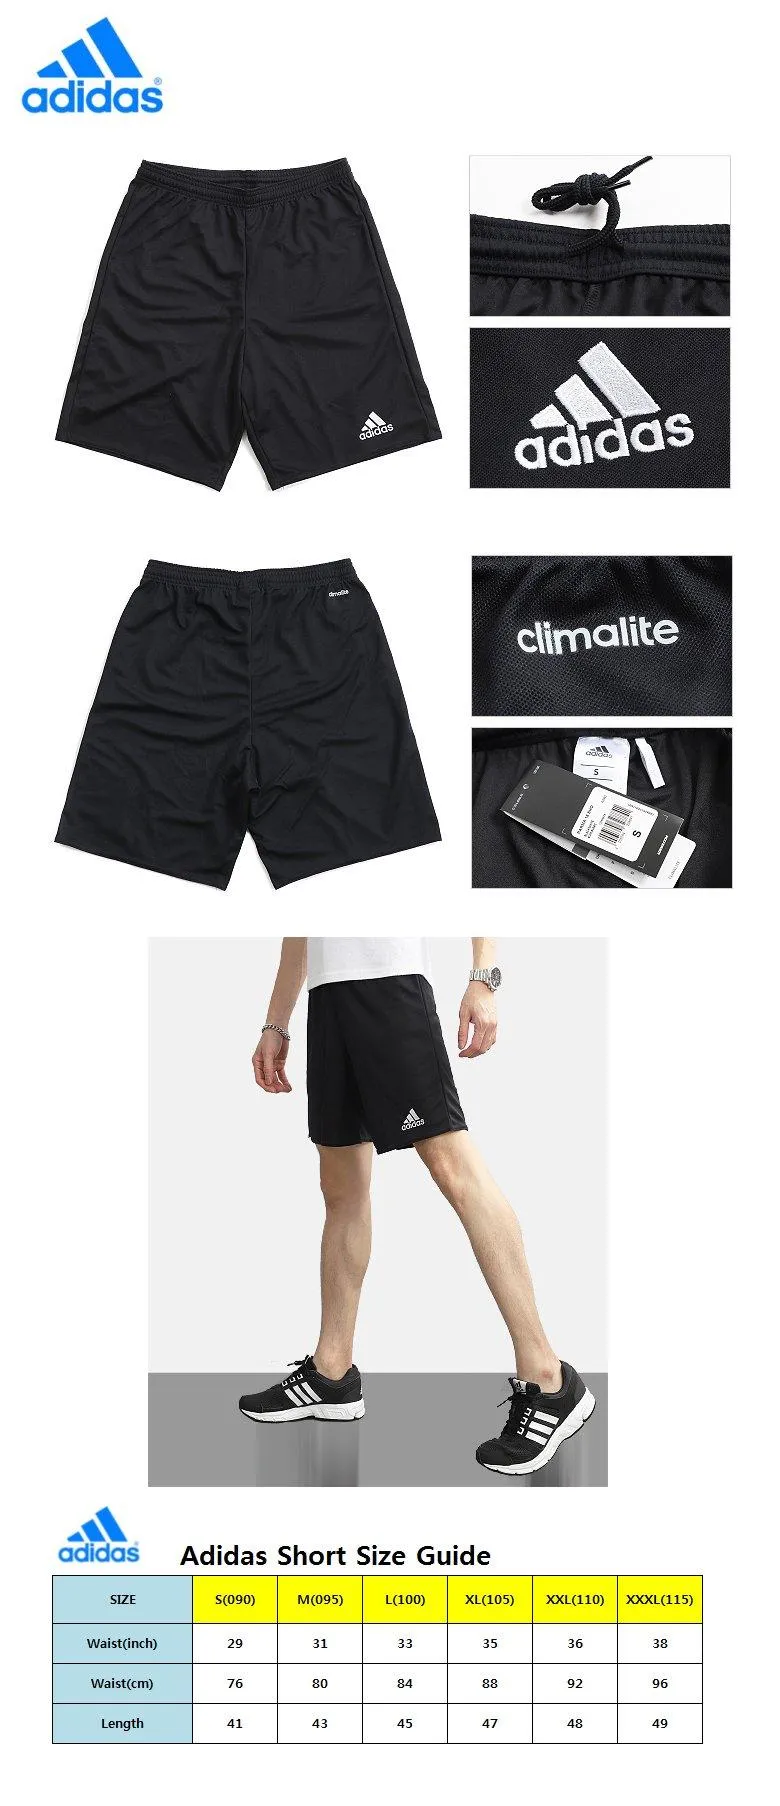 Adidas Parma 16 Shorts AJ5880 Black Football Climalite | Lazada Singapore